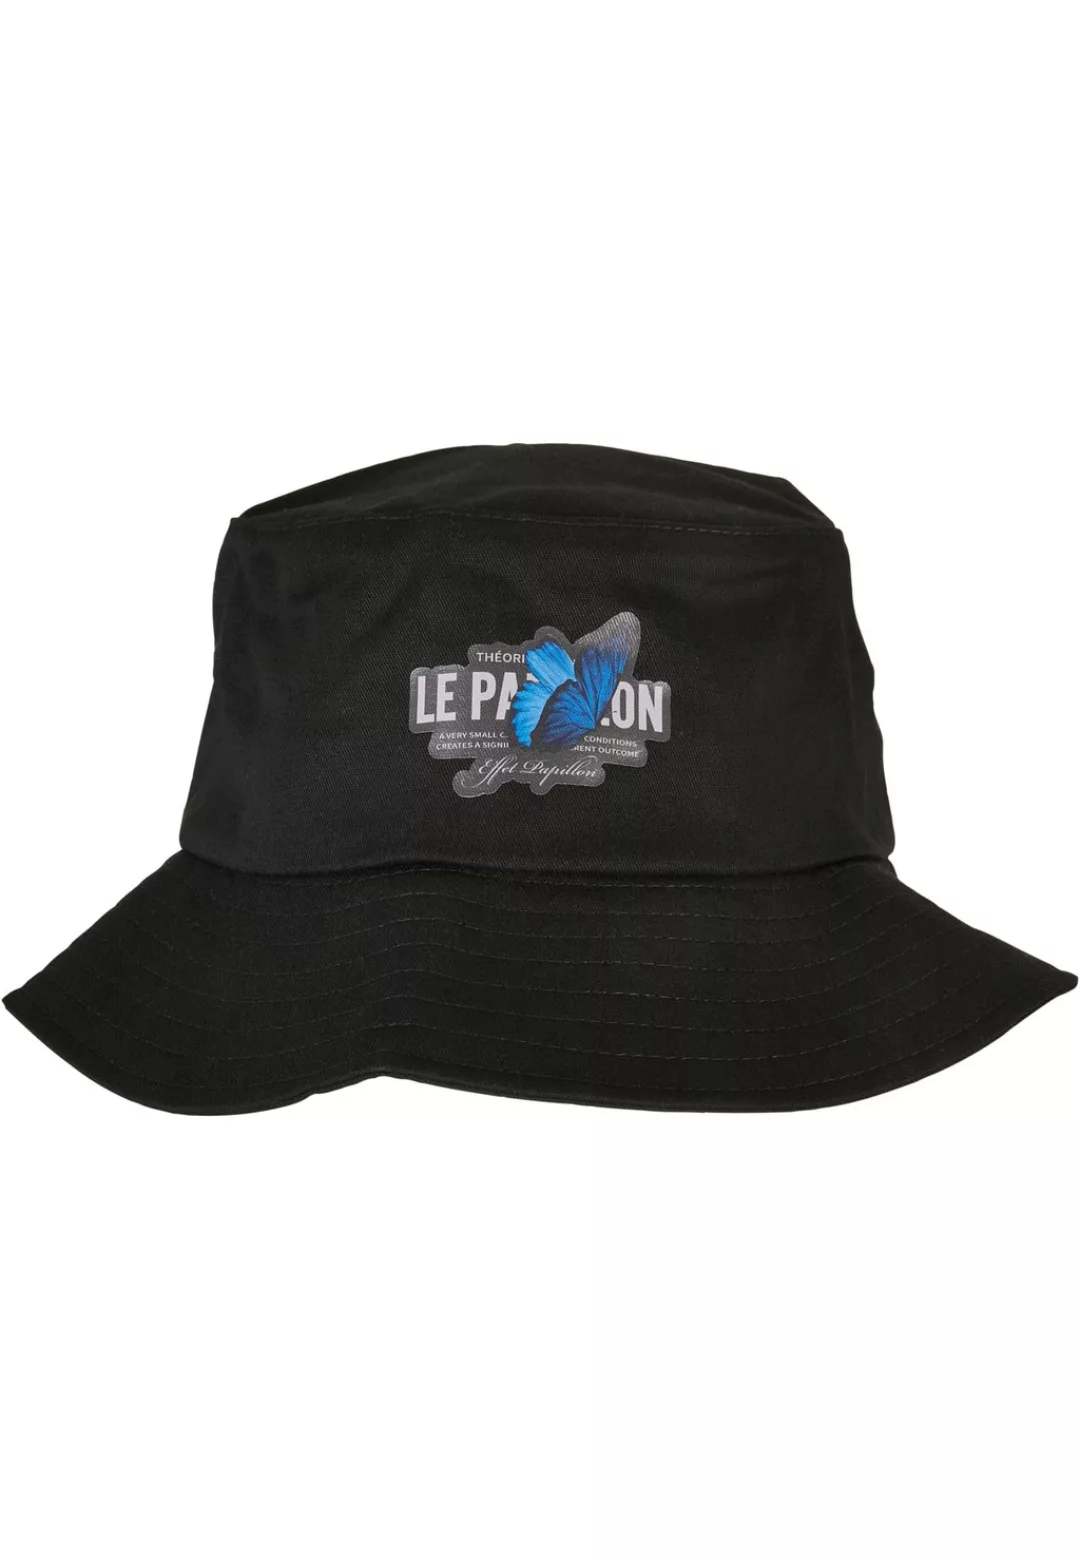 MisterTee Flex Cap "Accessoires Le Papillon Bucket Hat" günstig online kaufen